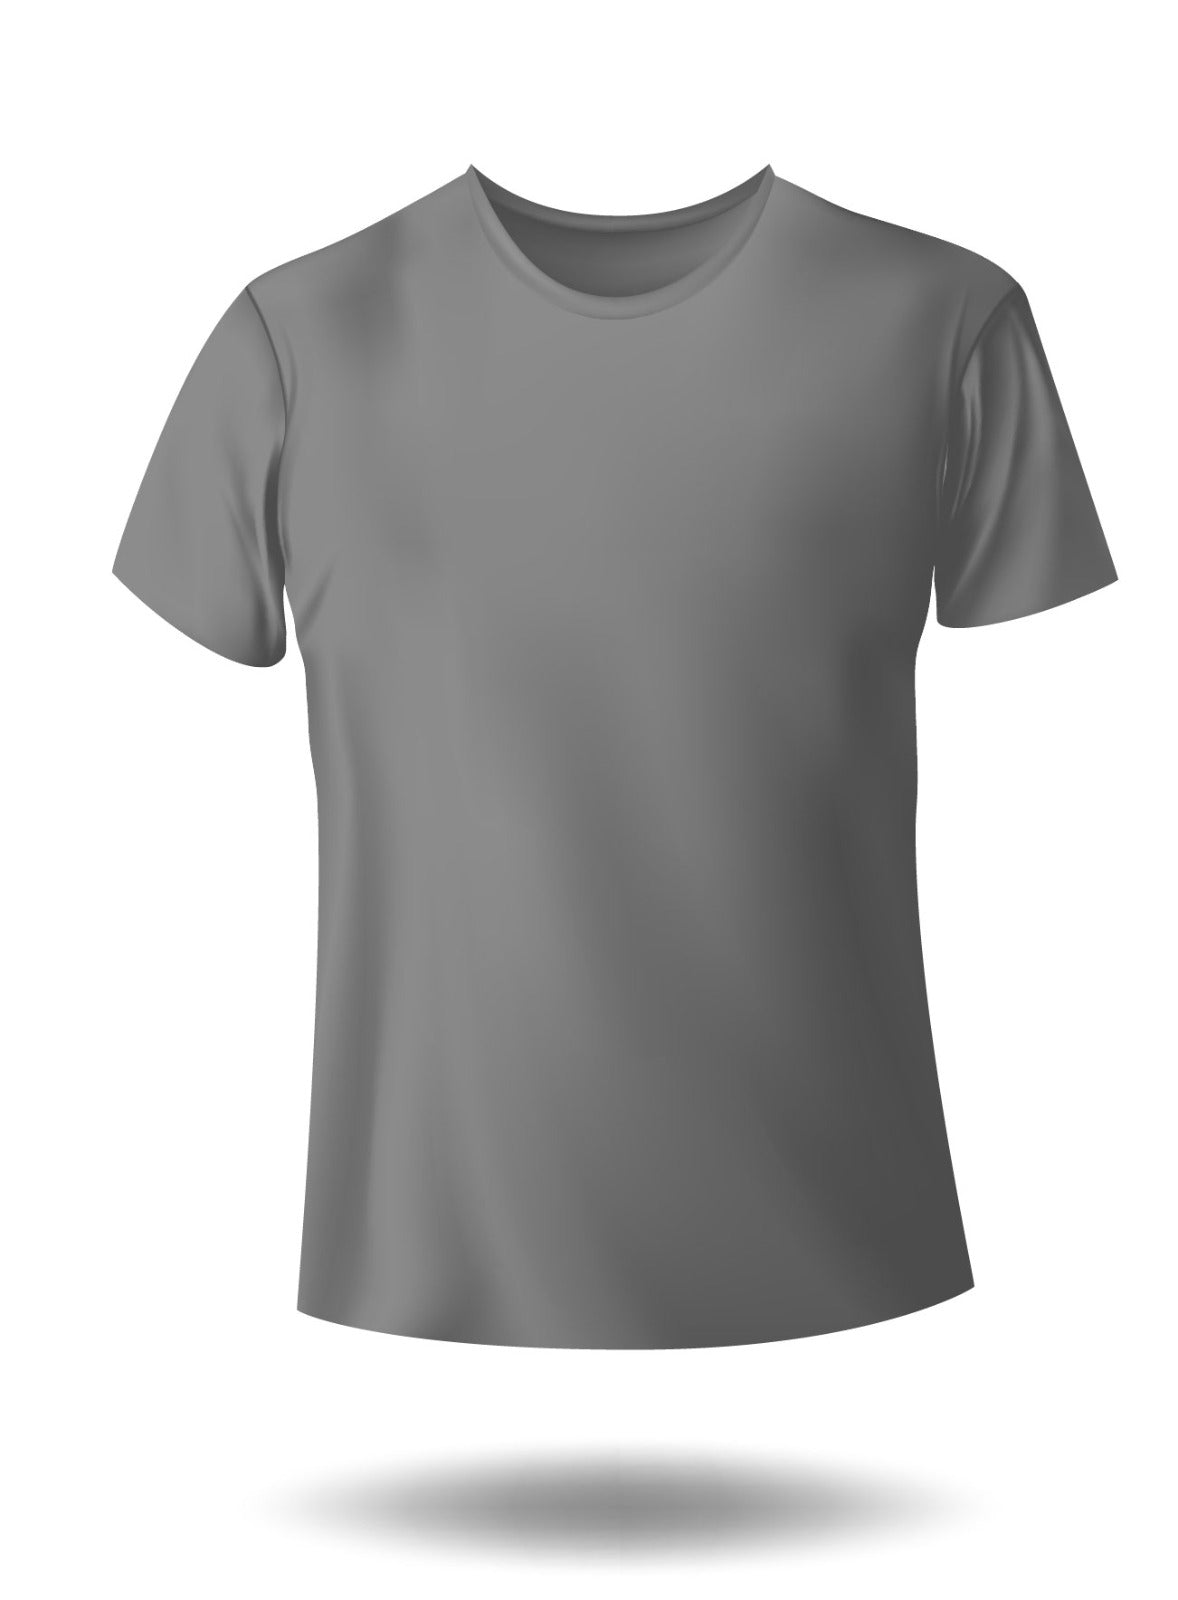 15% dark grey t-shirt